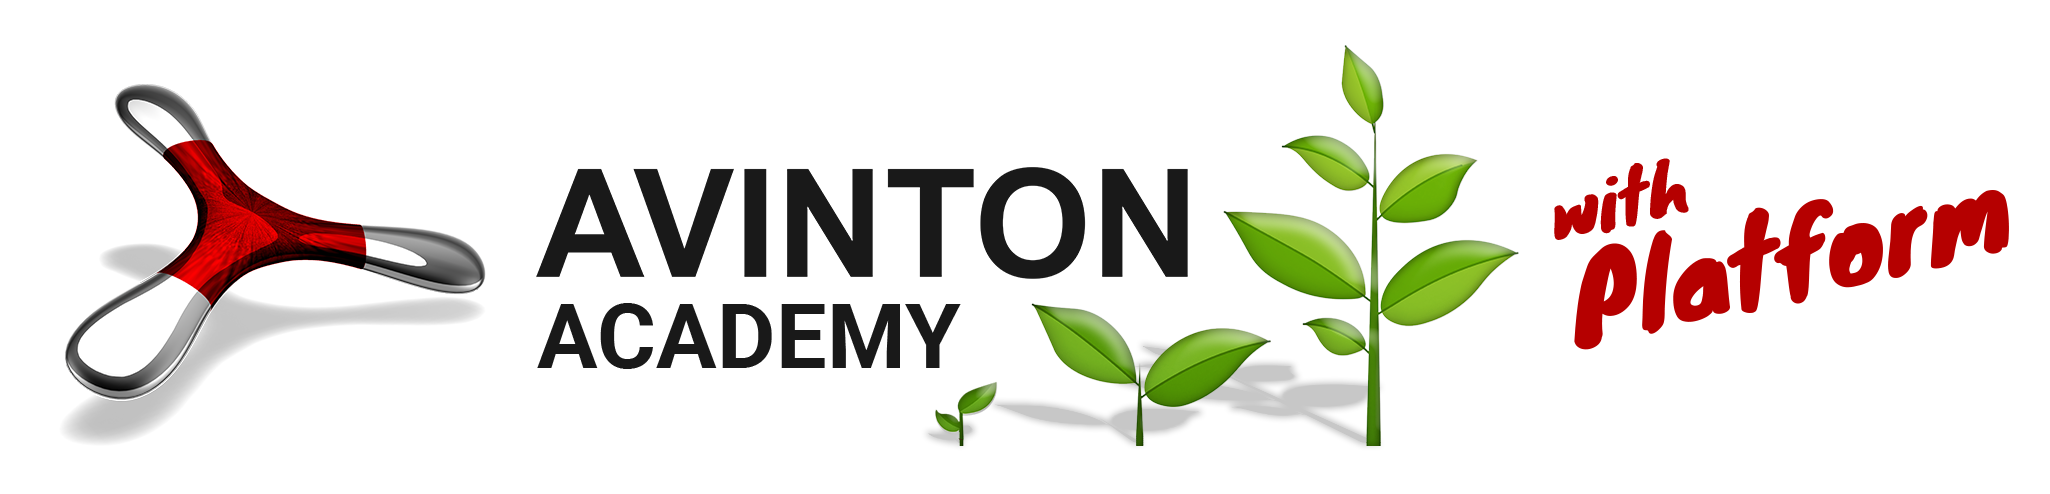 Avinton Academy with Platform